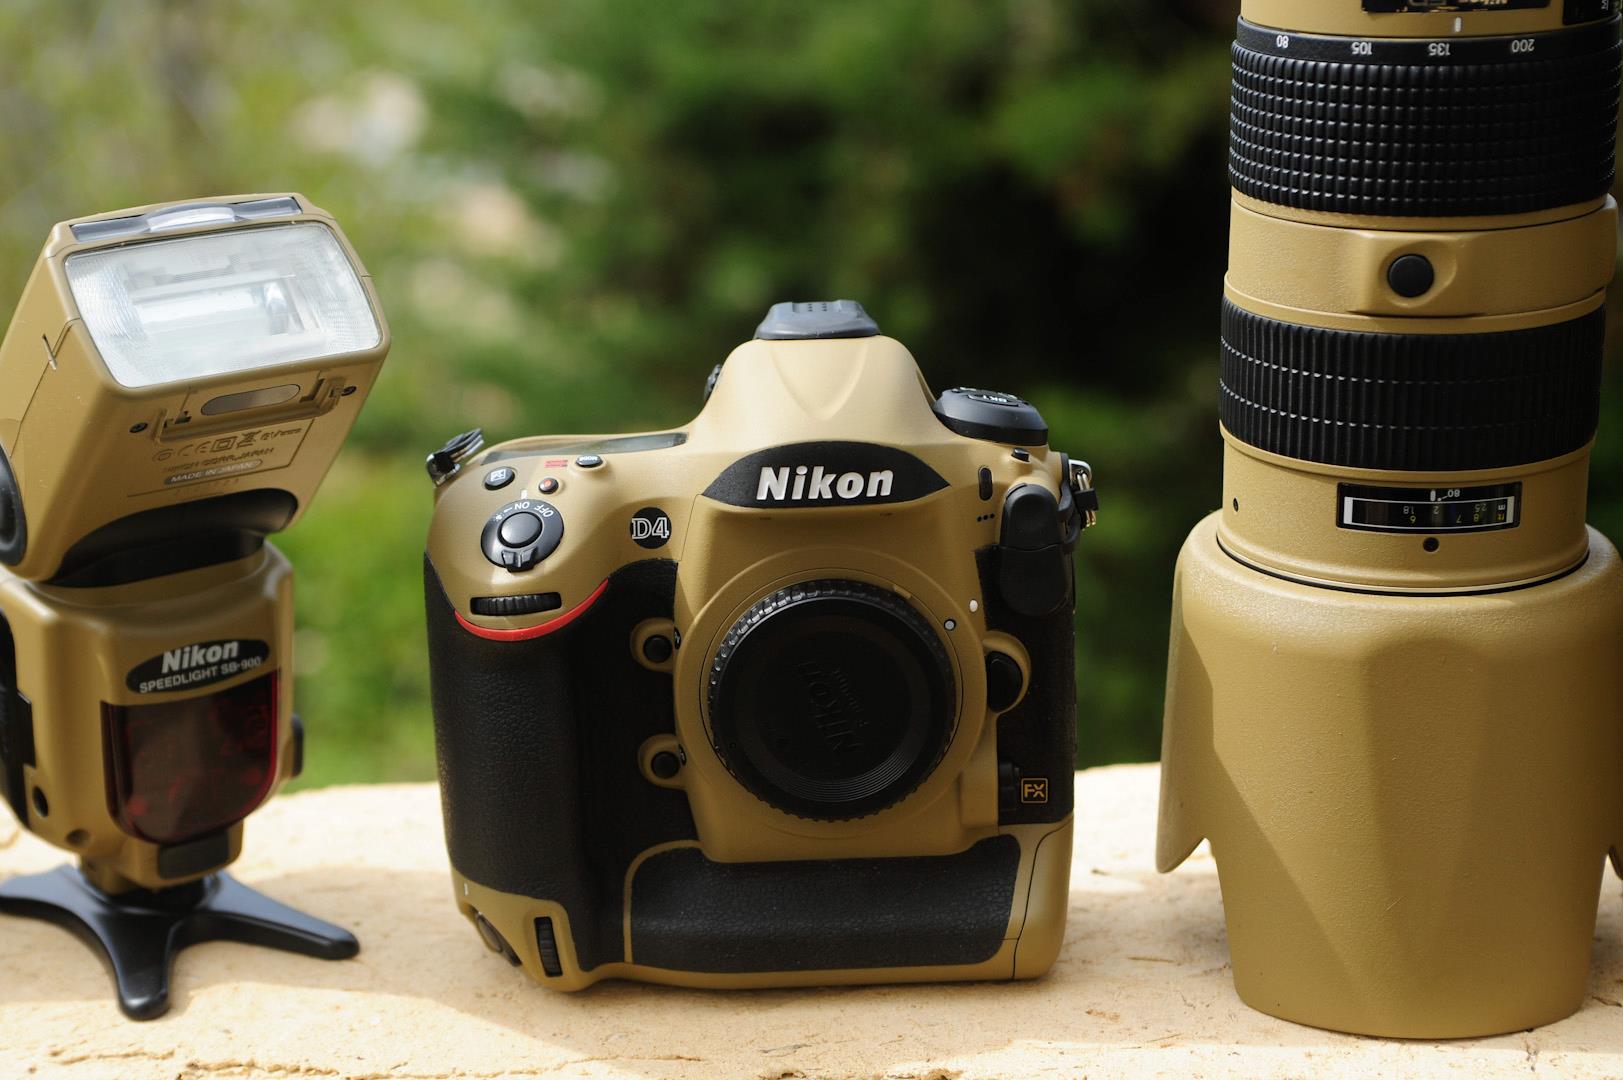 Military grade "Desert Mirage Lizard" painted Nikon gear - Nikon Rumors